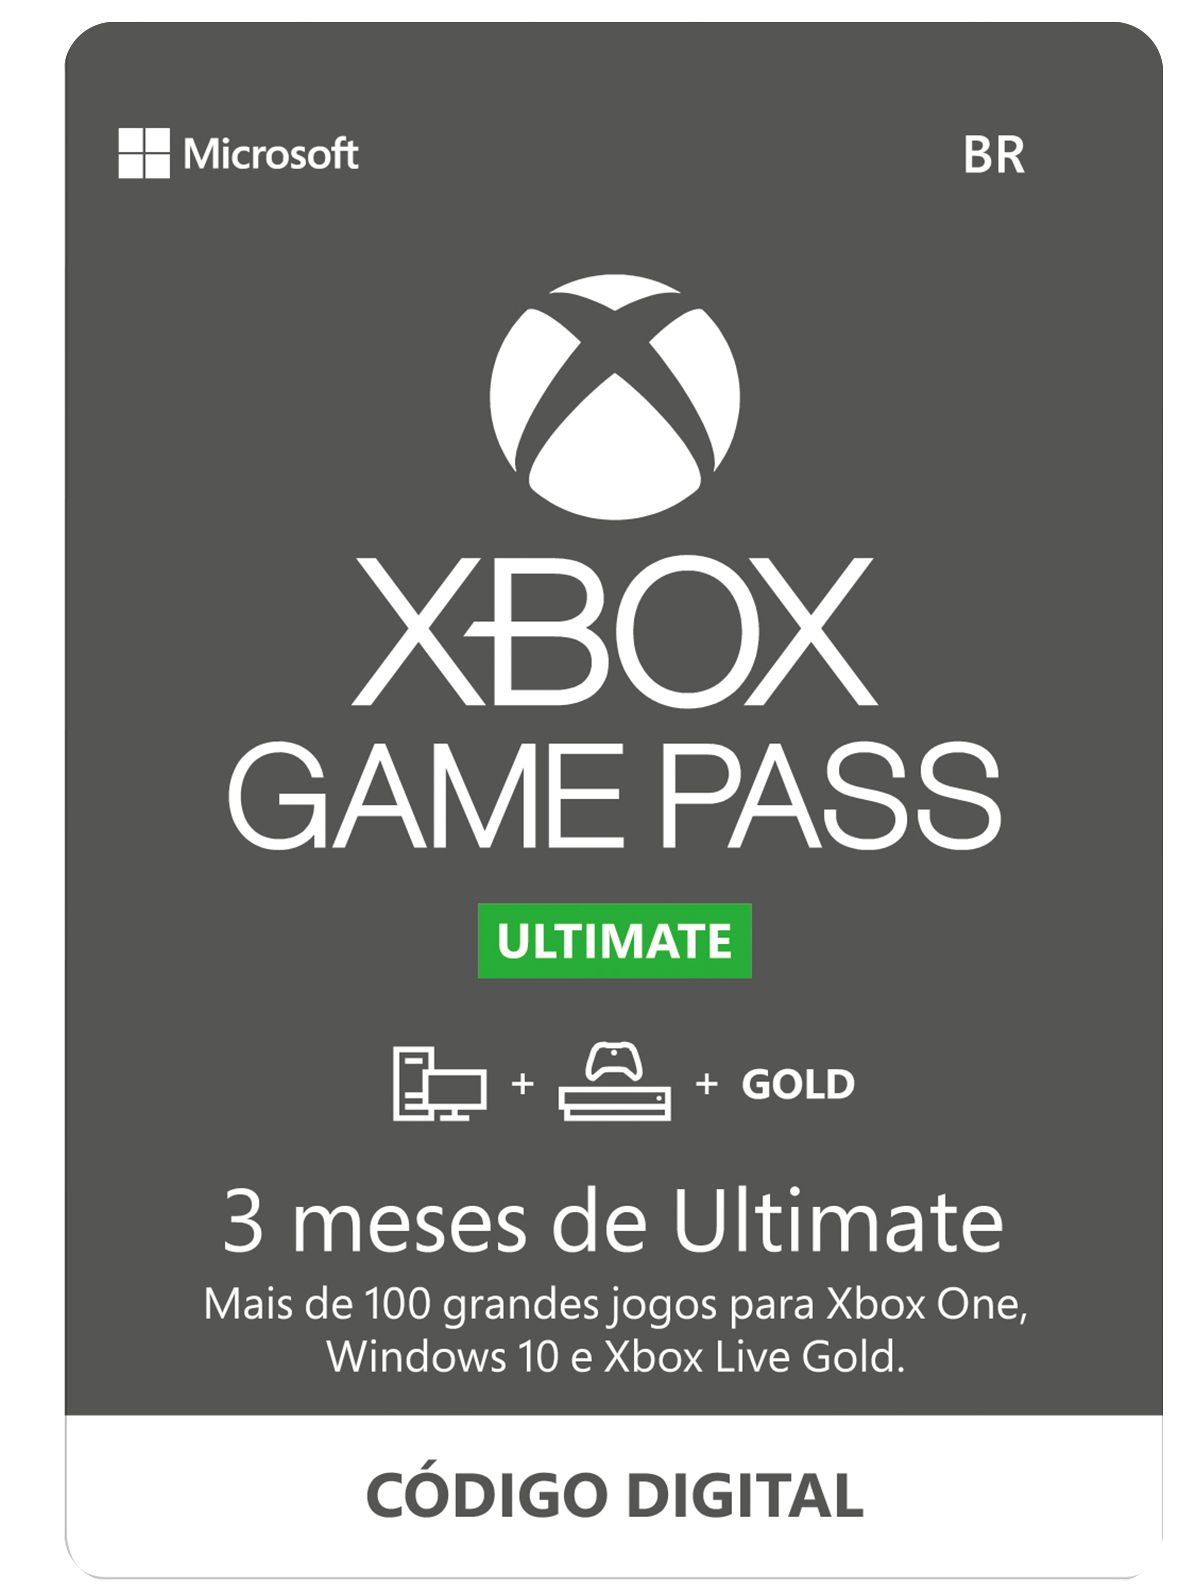 Xbox Game Pass Ultimate 1 Mes 30 Dias Pc Código 25 Dígitos